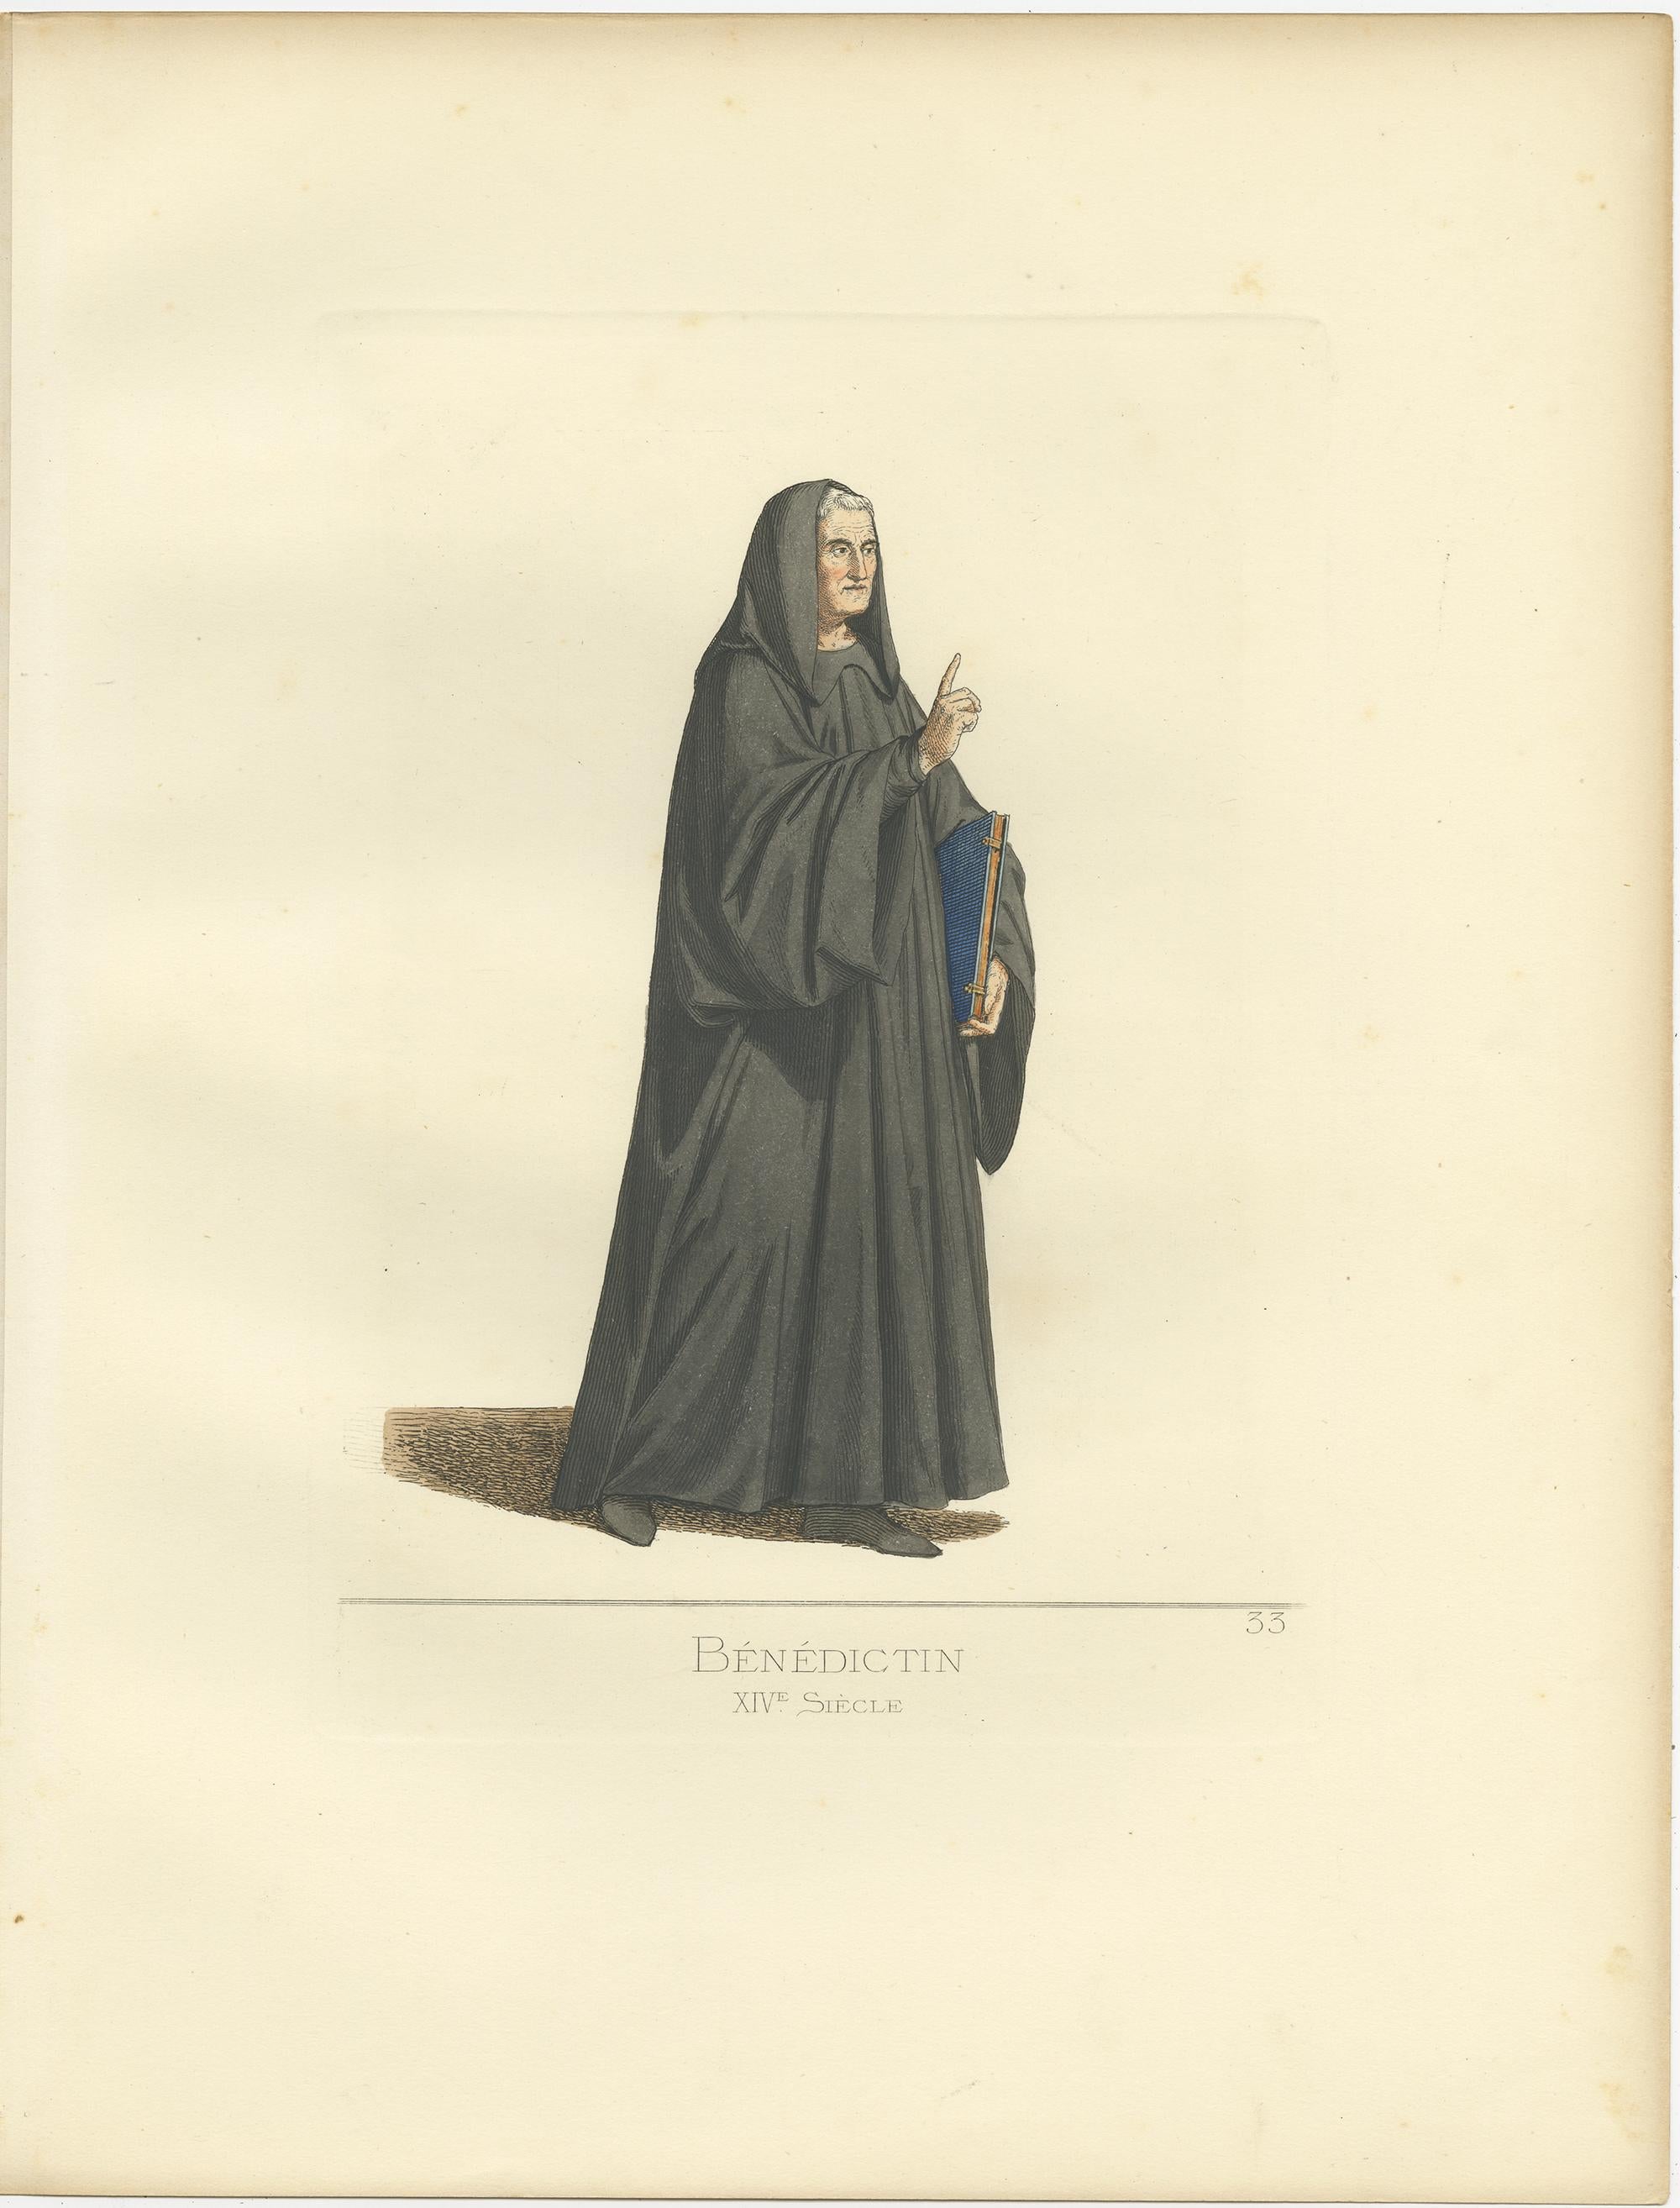 14th century monk